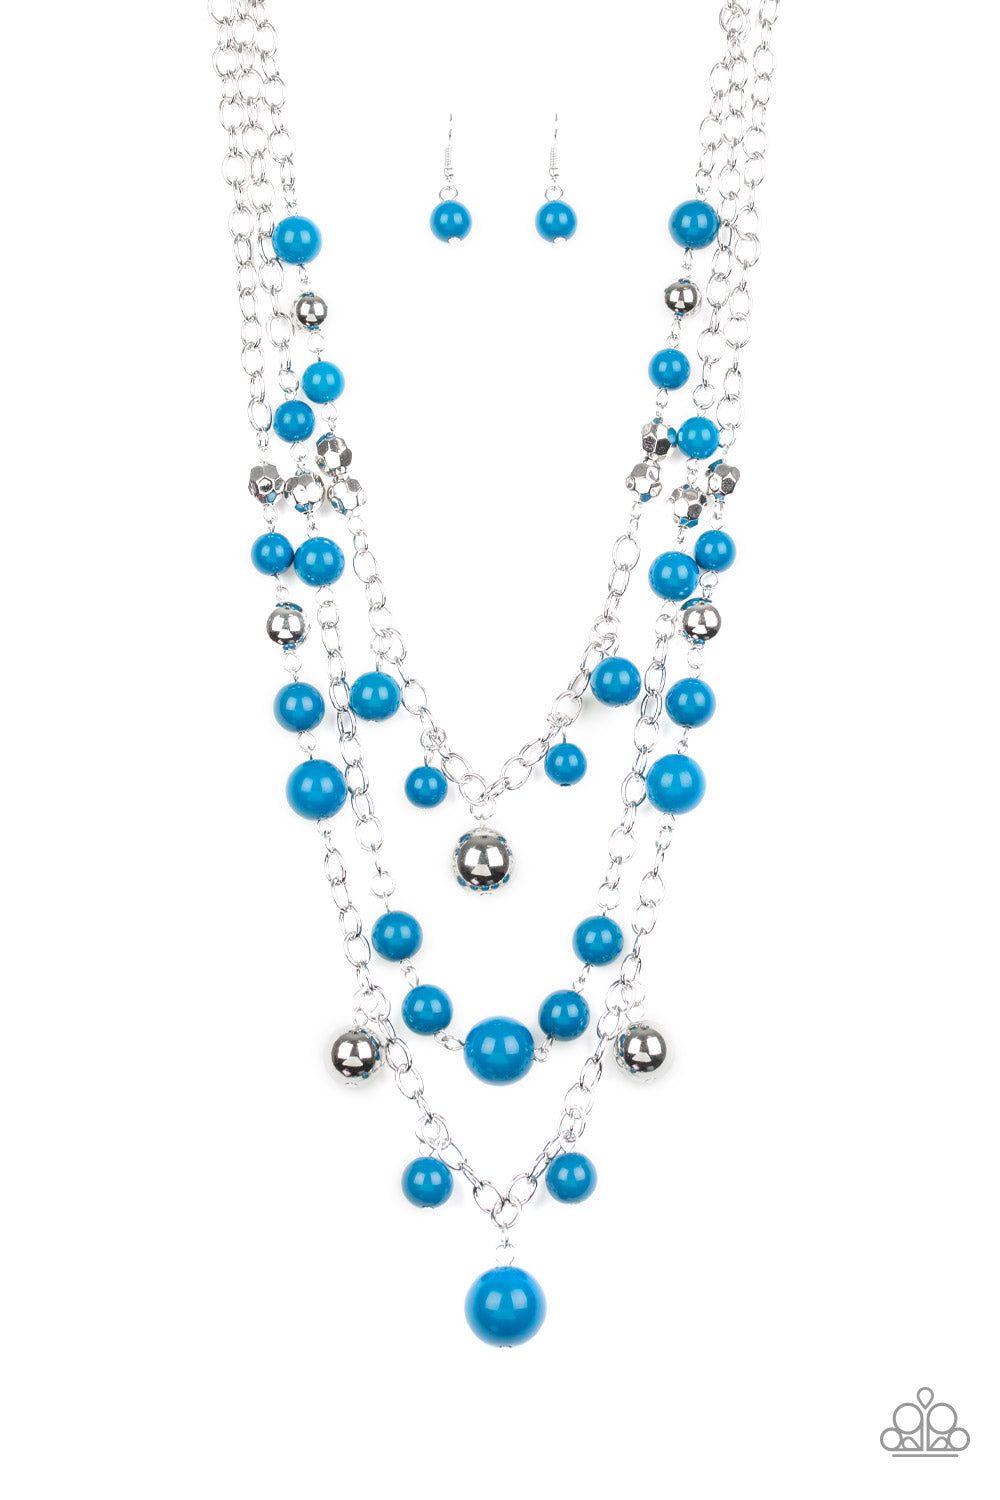 The Partygoer Blue Paparazzi Necklaces Cashmere Pink Jewels - Cashmere Pink Jewels & Accessories, Cashmere Pink Jewels & Accessories - Paparazzi